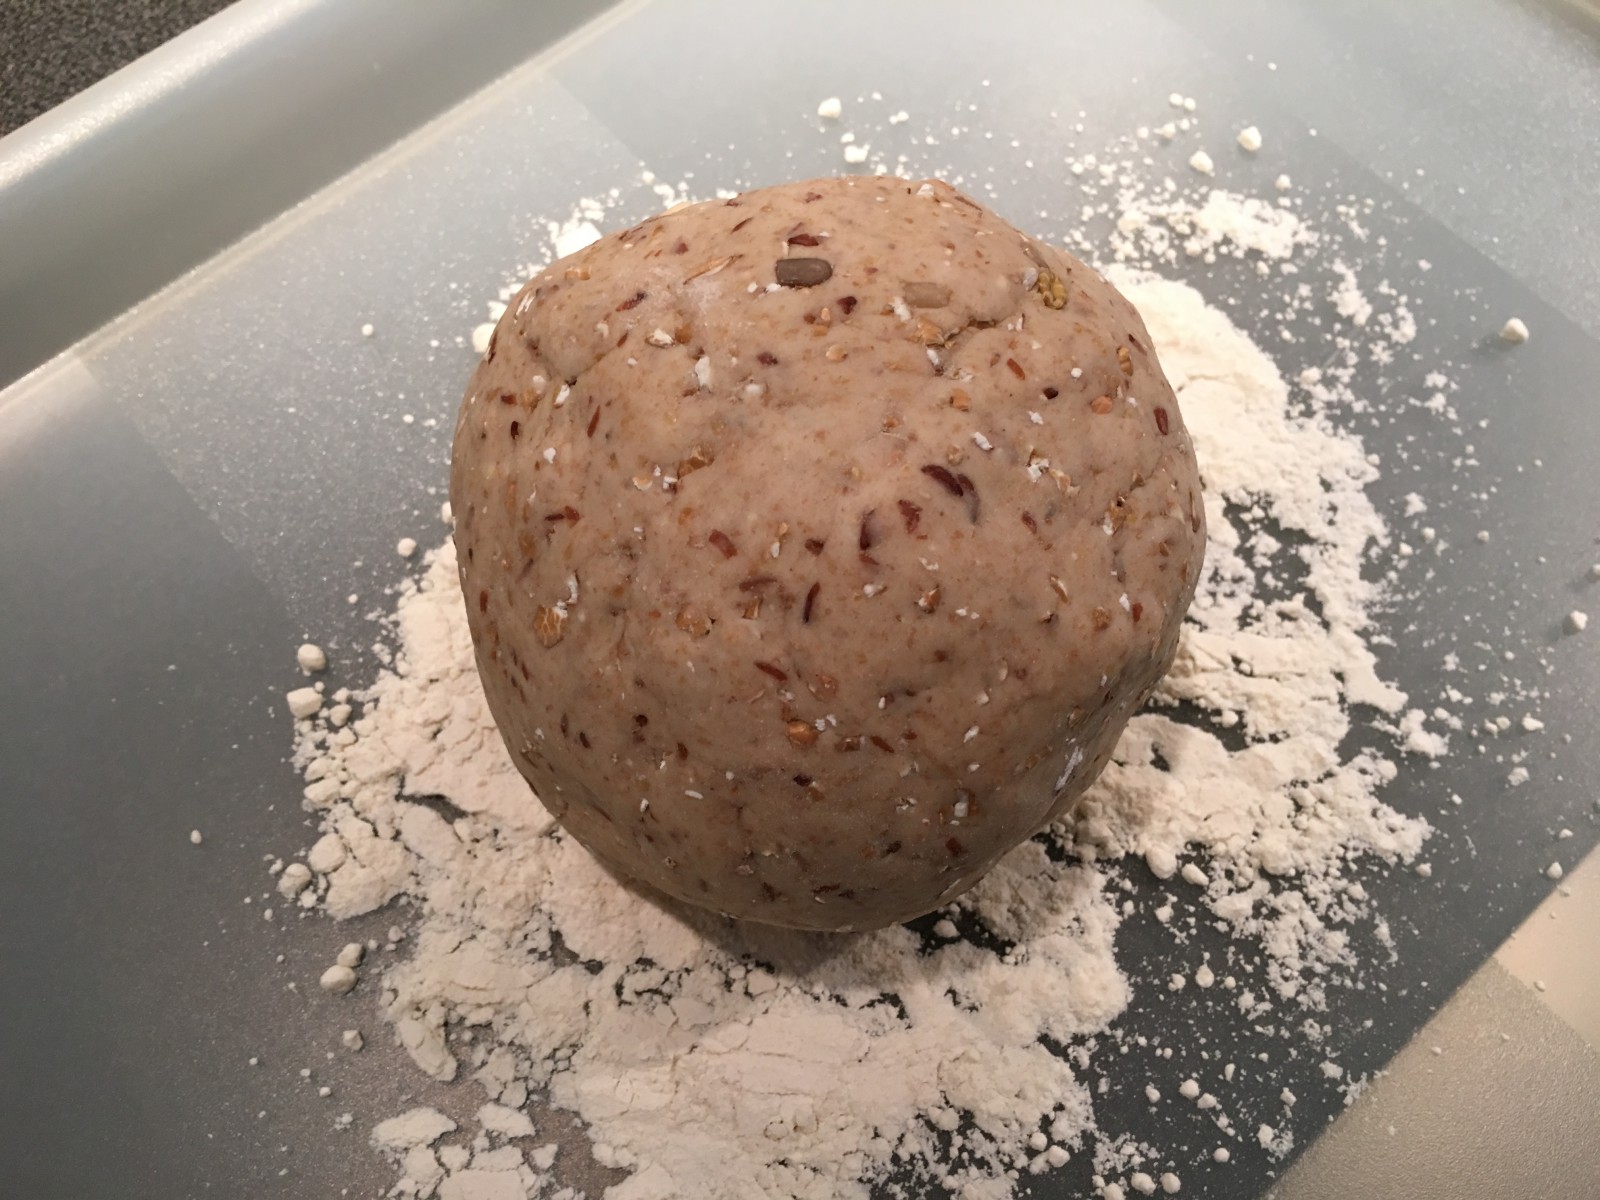 Fertig geknetet - die Vollkornkugel wird bald zu Brot